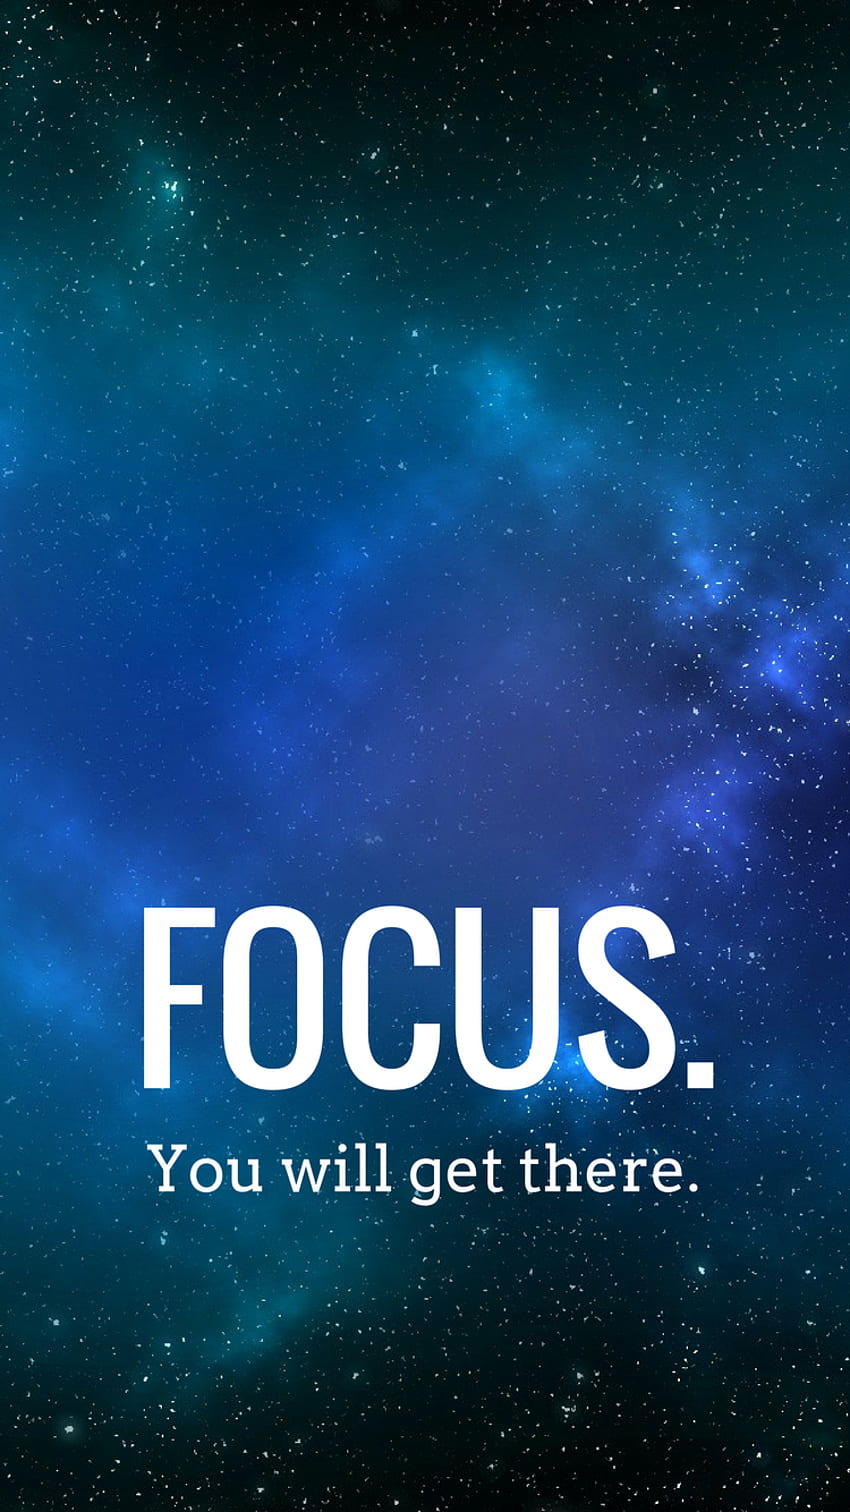 Change wallpaper by focus | MacRumors Forums